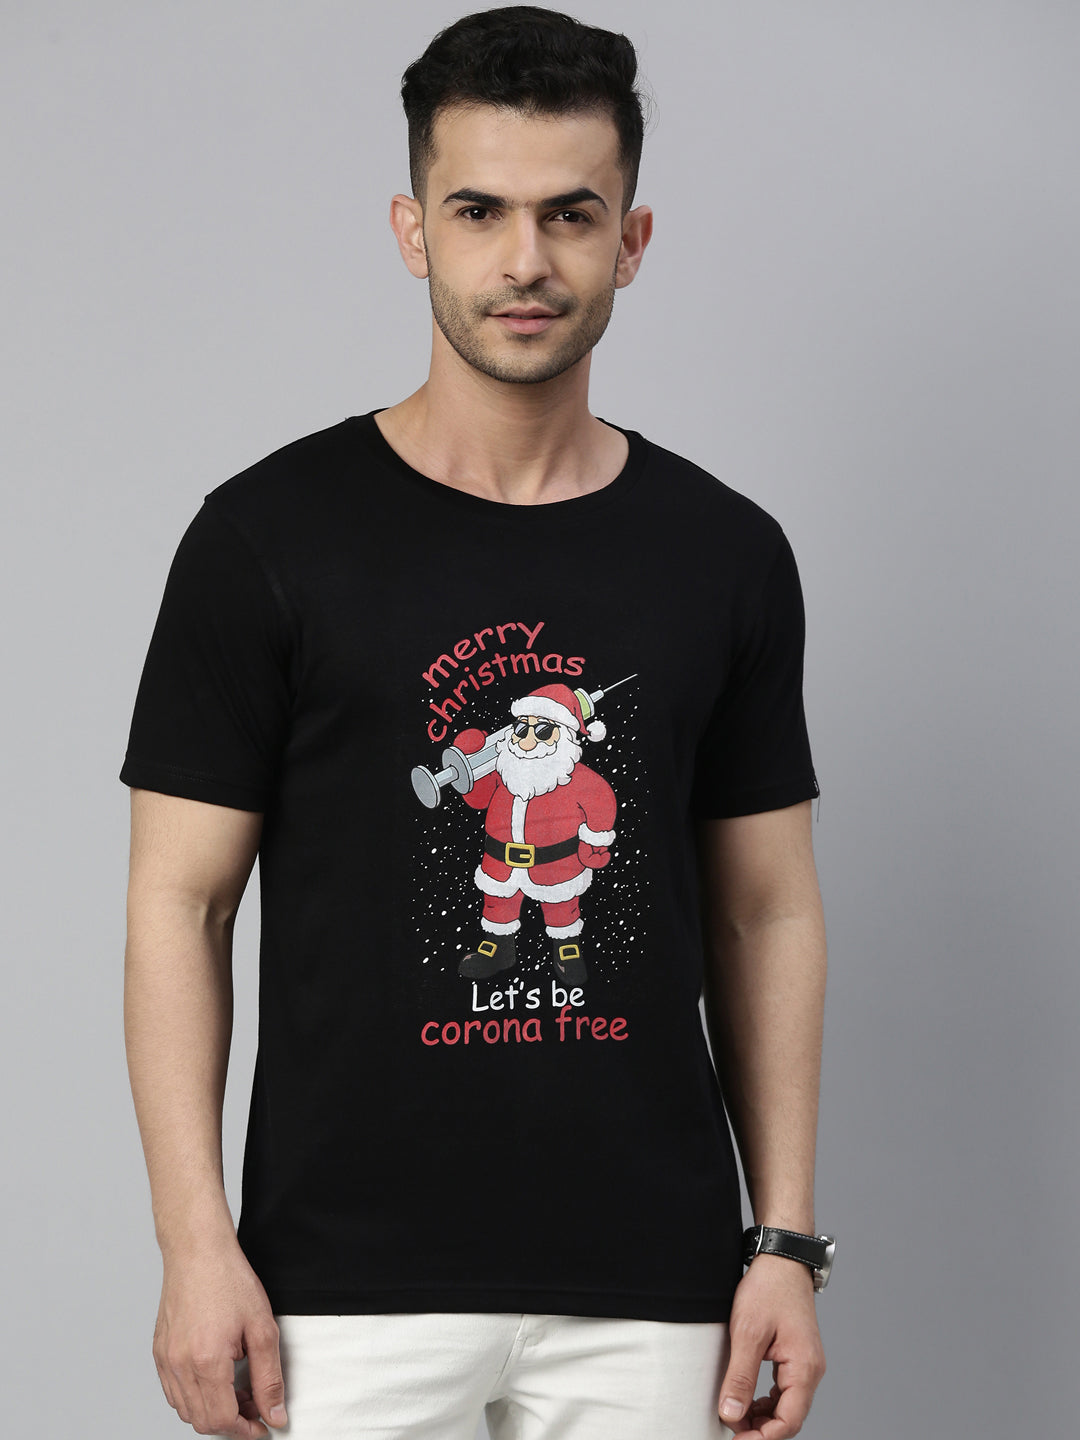 This Christmas Lets Be Corona Free T-Shirt Graphic T-Shirts Bushirt   